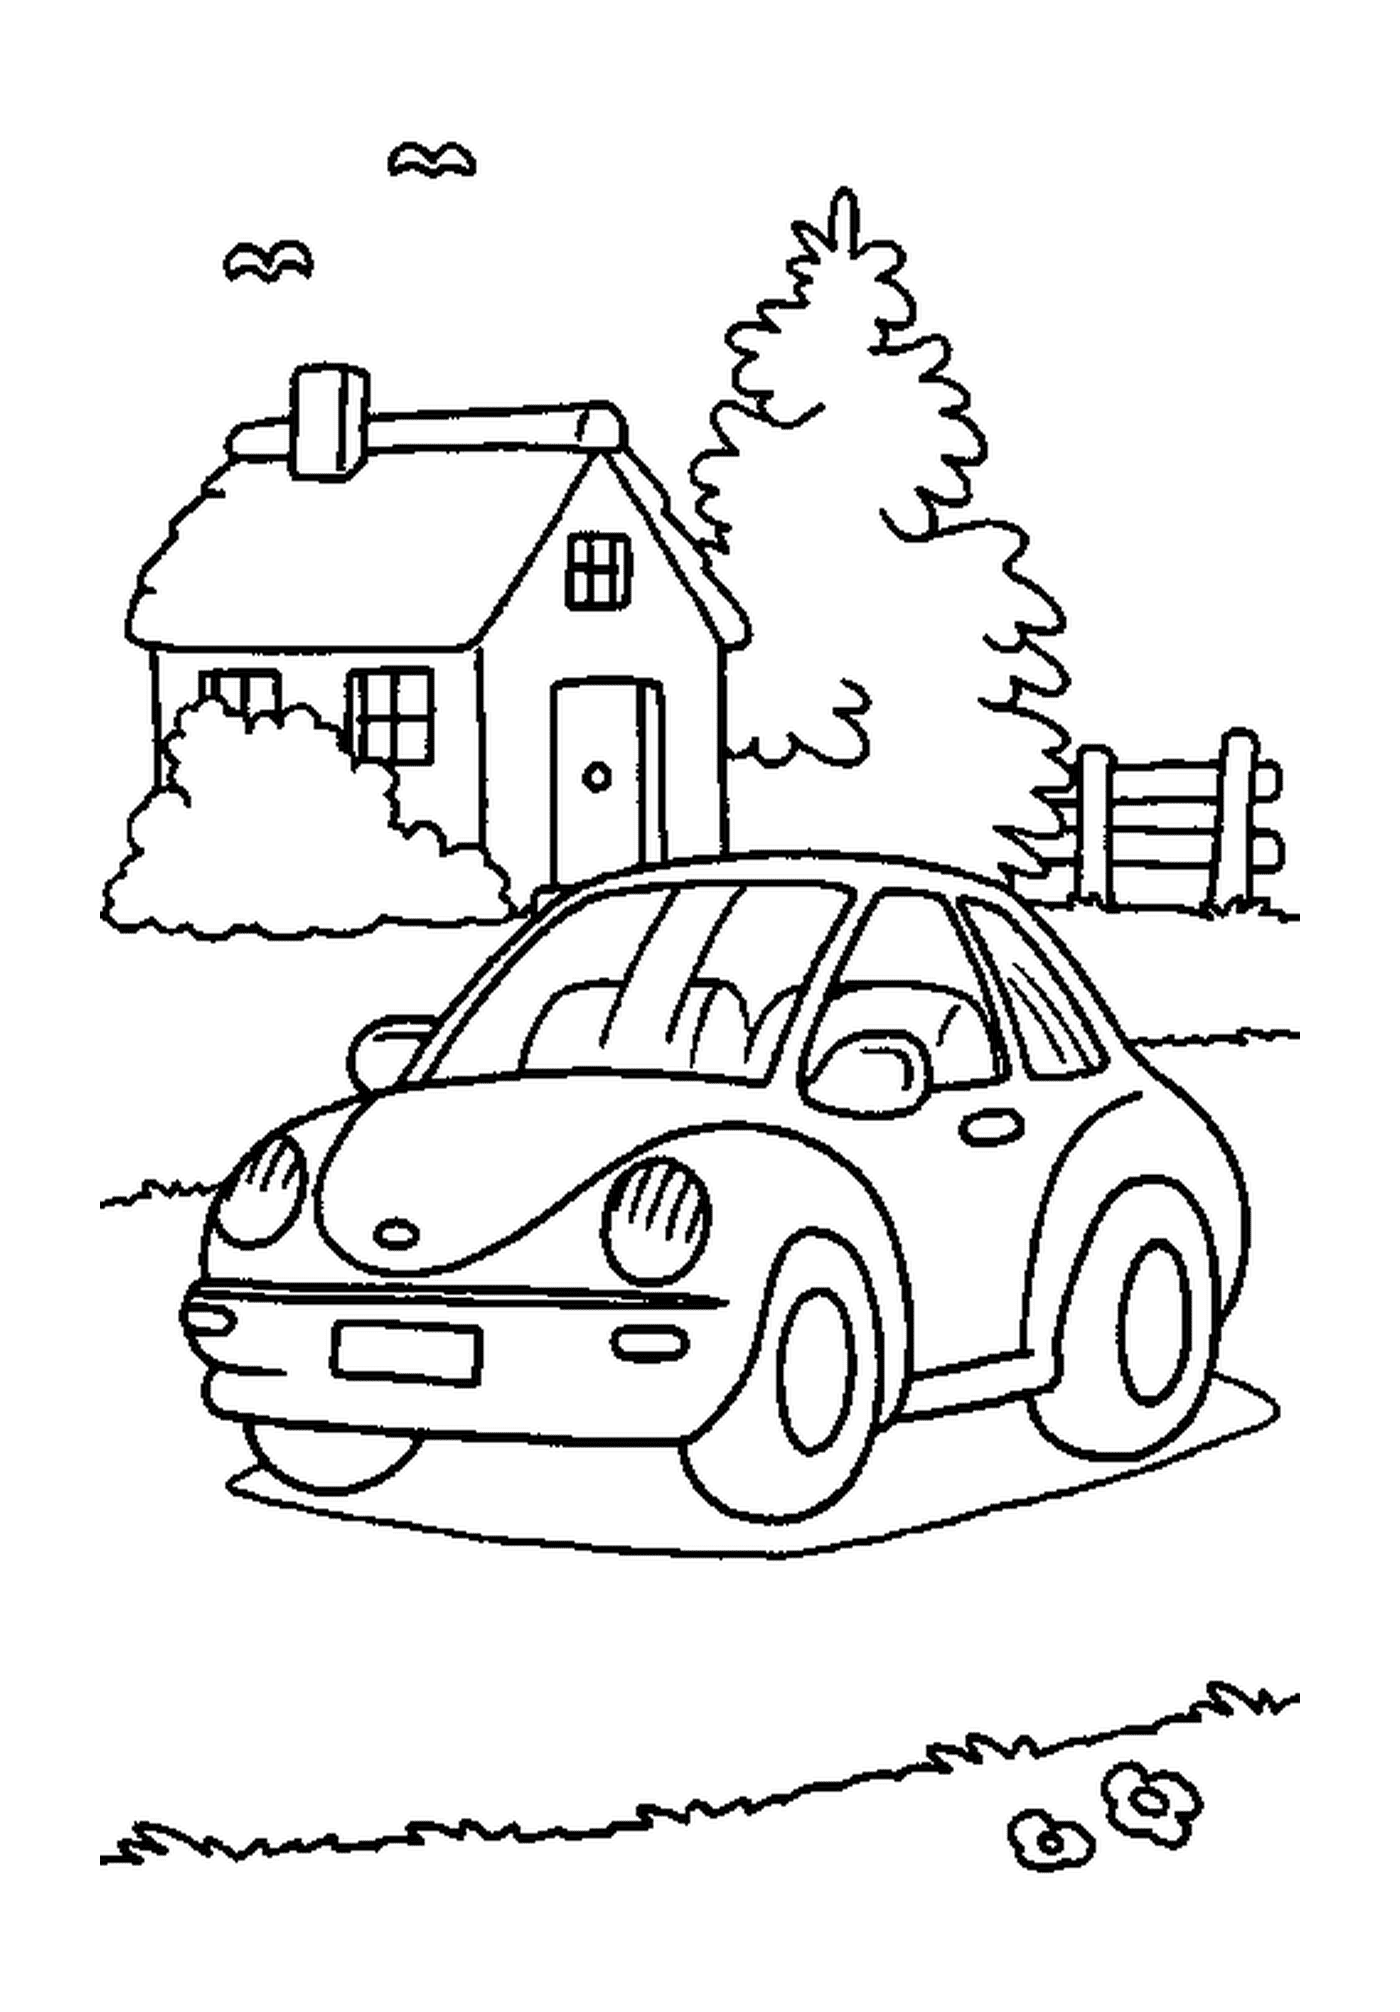  Haus mit Auto 